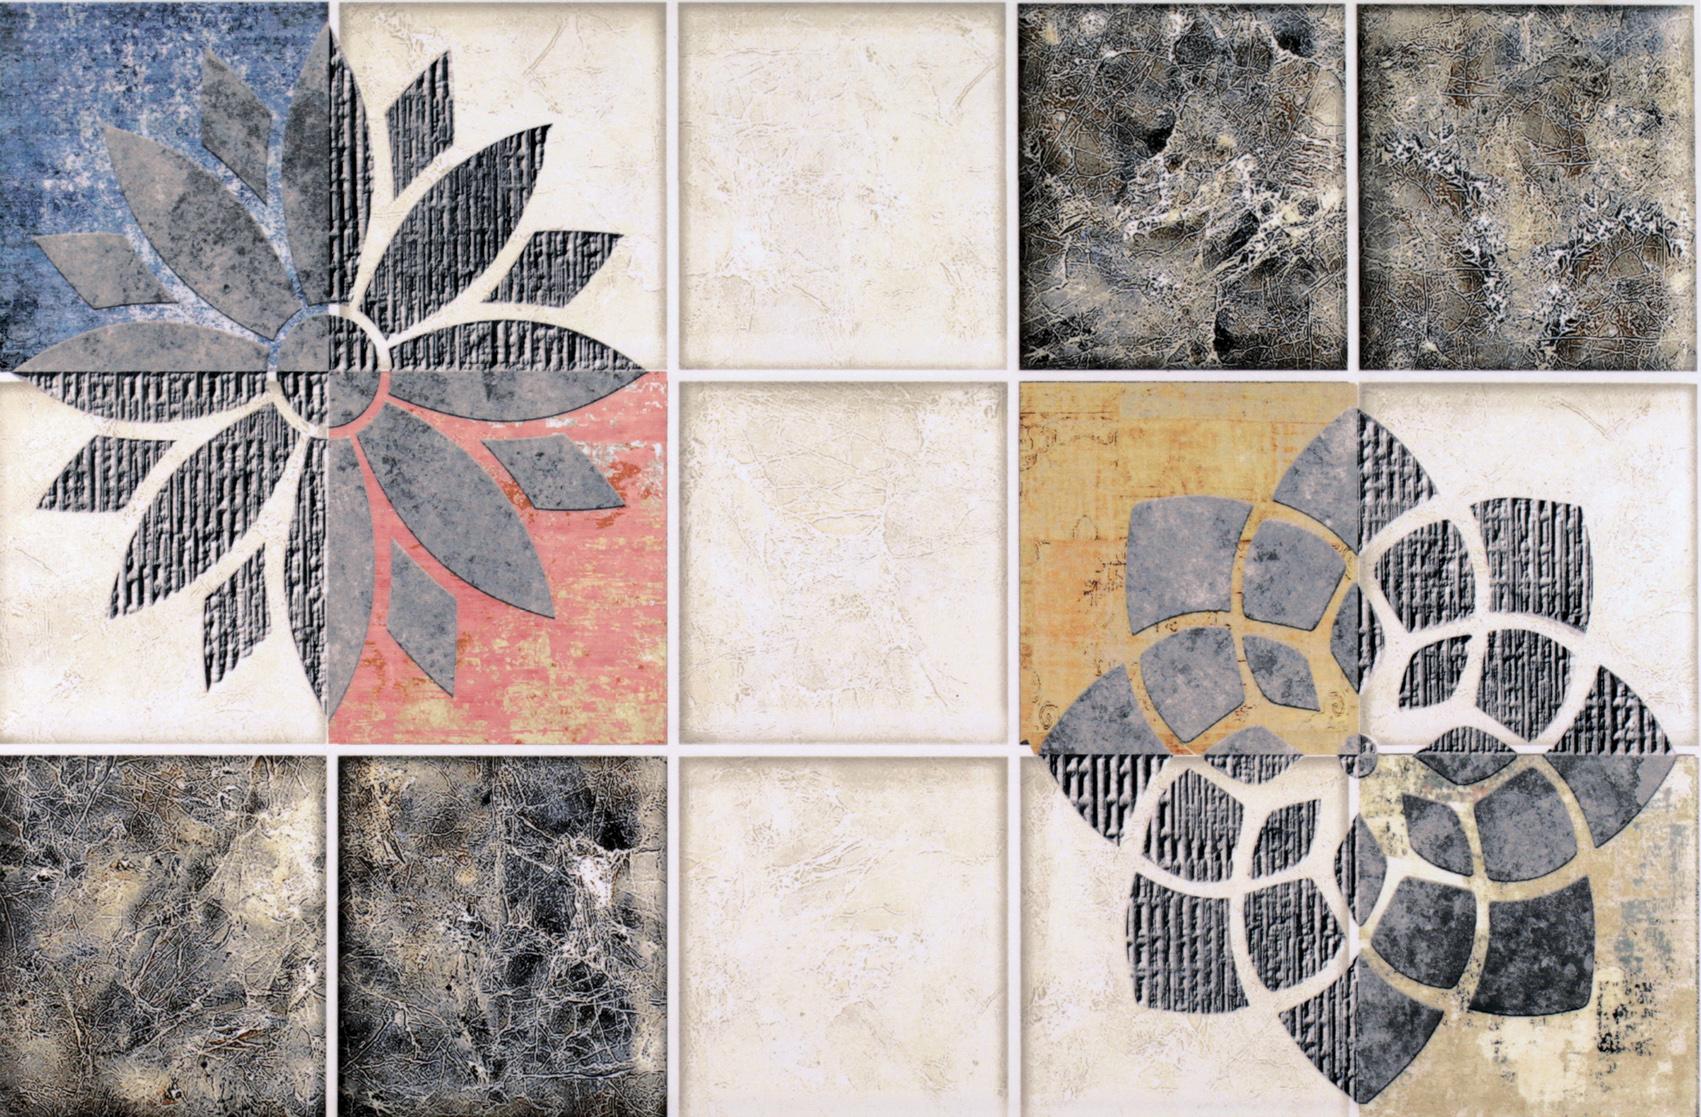 Wall Tiles for Bathroom Tiles, Kitchen Tiles, Accent Tiles